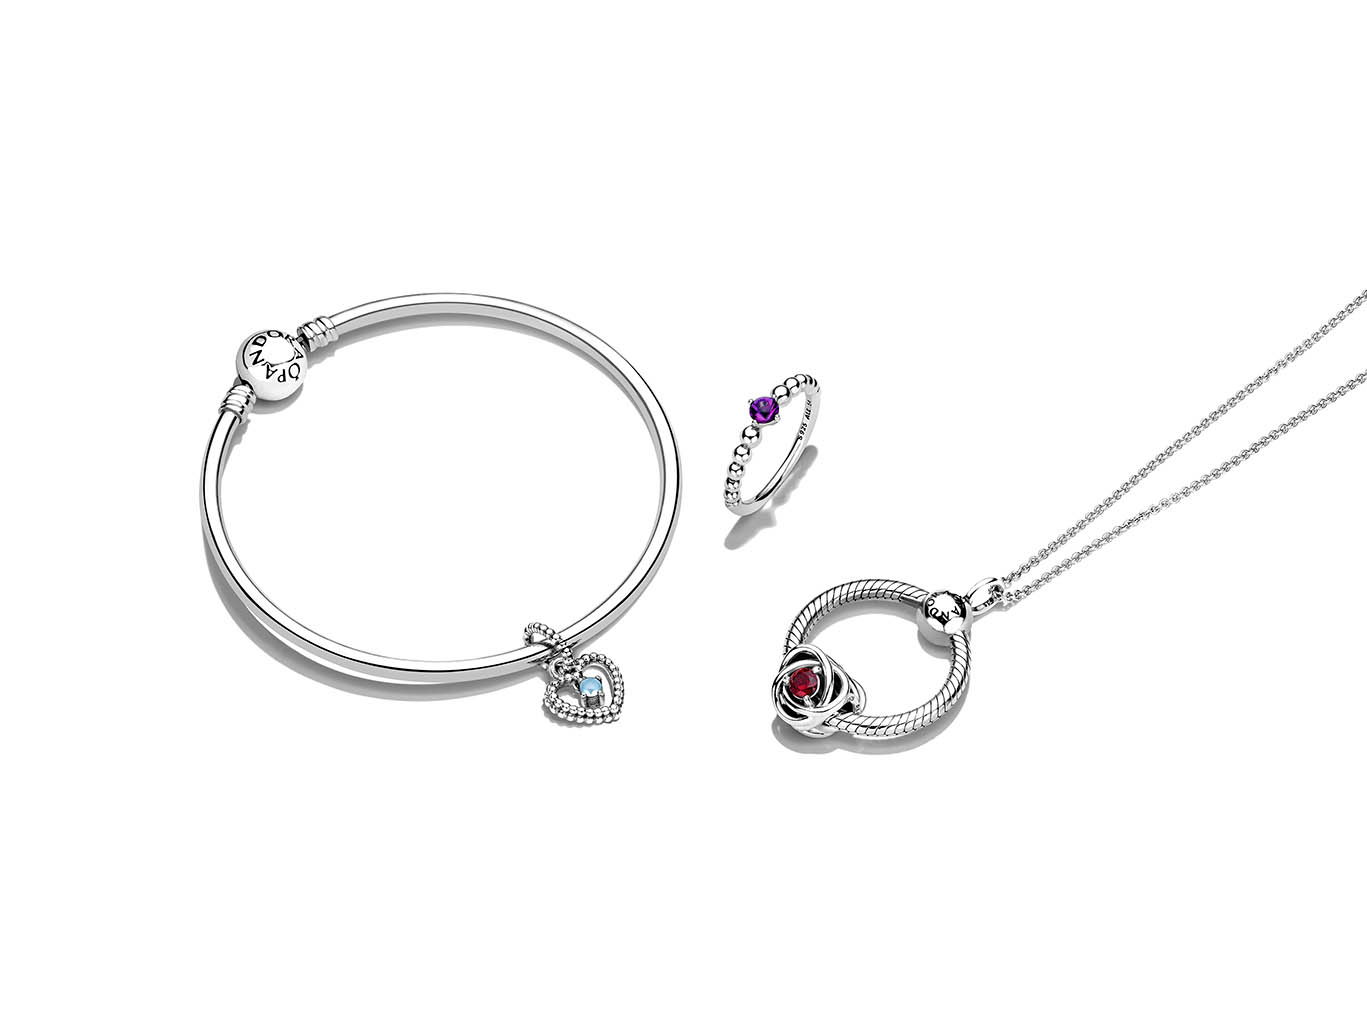 Packshot Factory - Chain - Pandora jewellery bracelet ring and necklace set